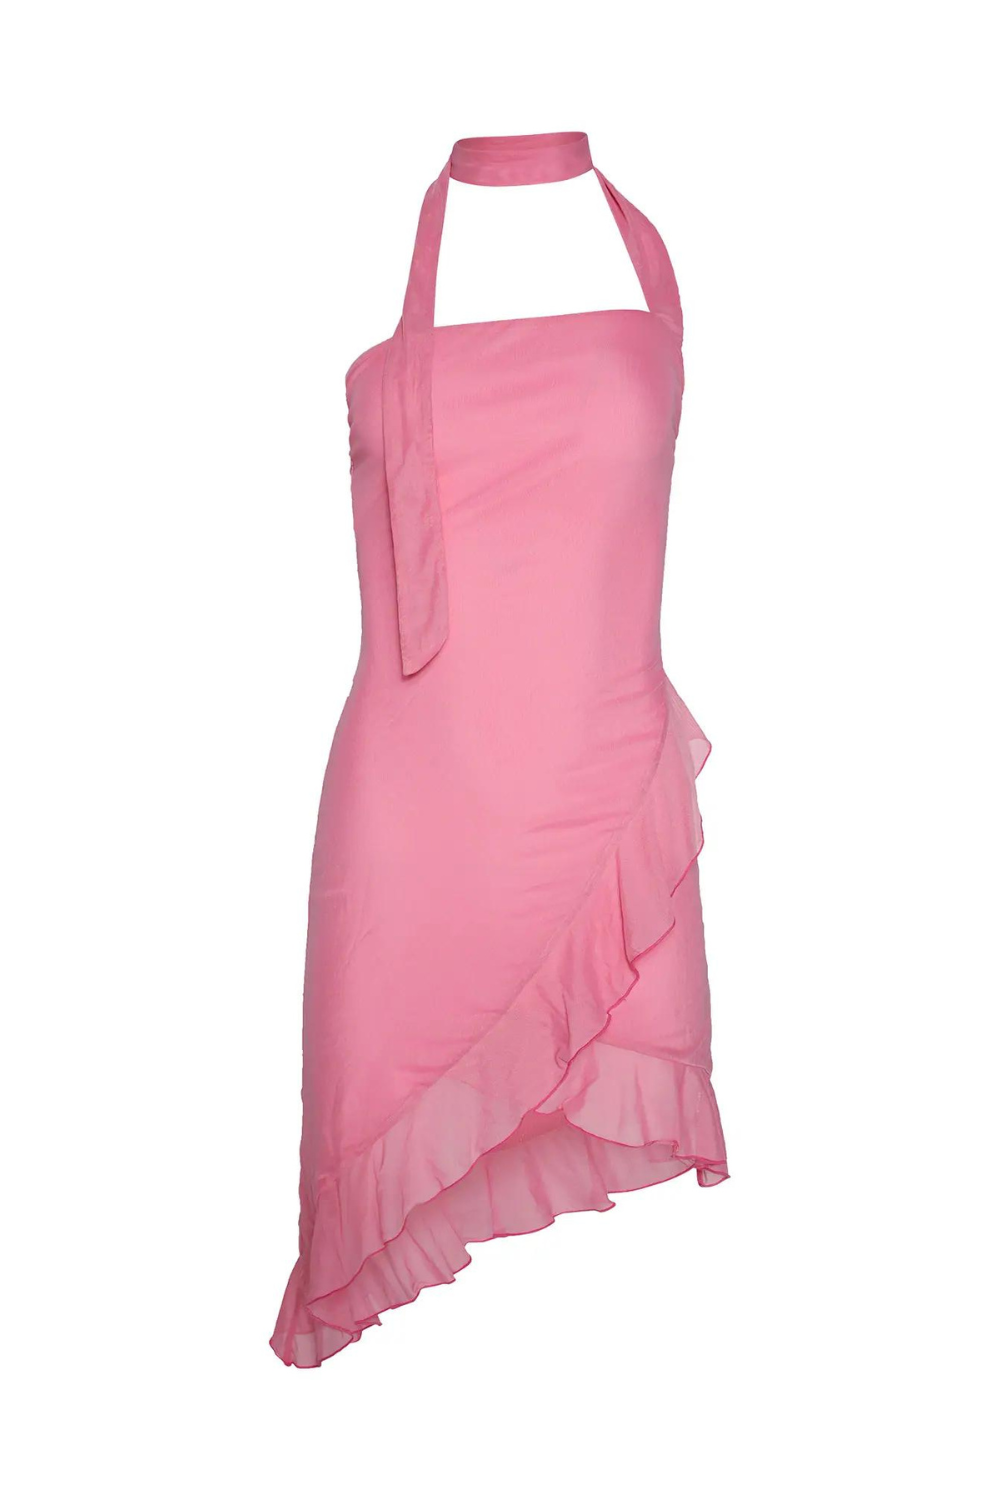 Sesidy-Arabella Pink Silk Mesh Dress-Women's Clothing Online Store